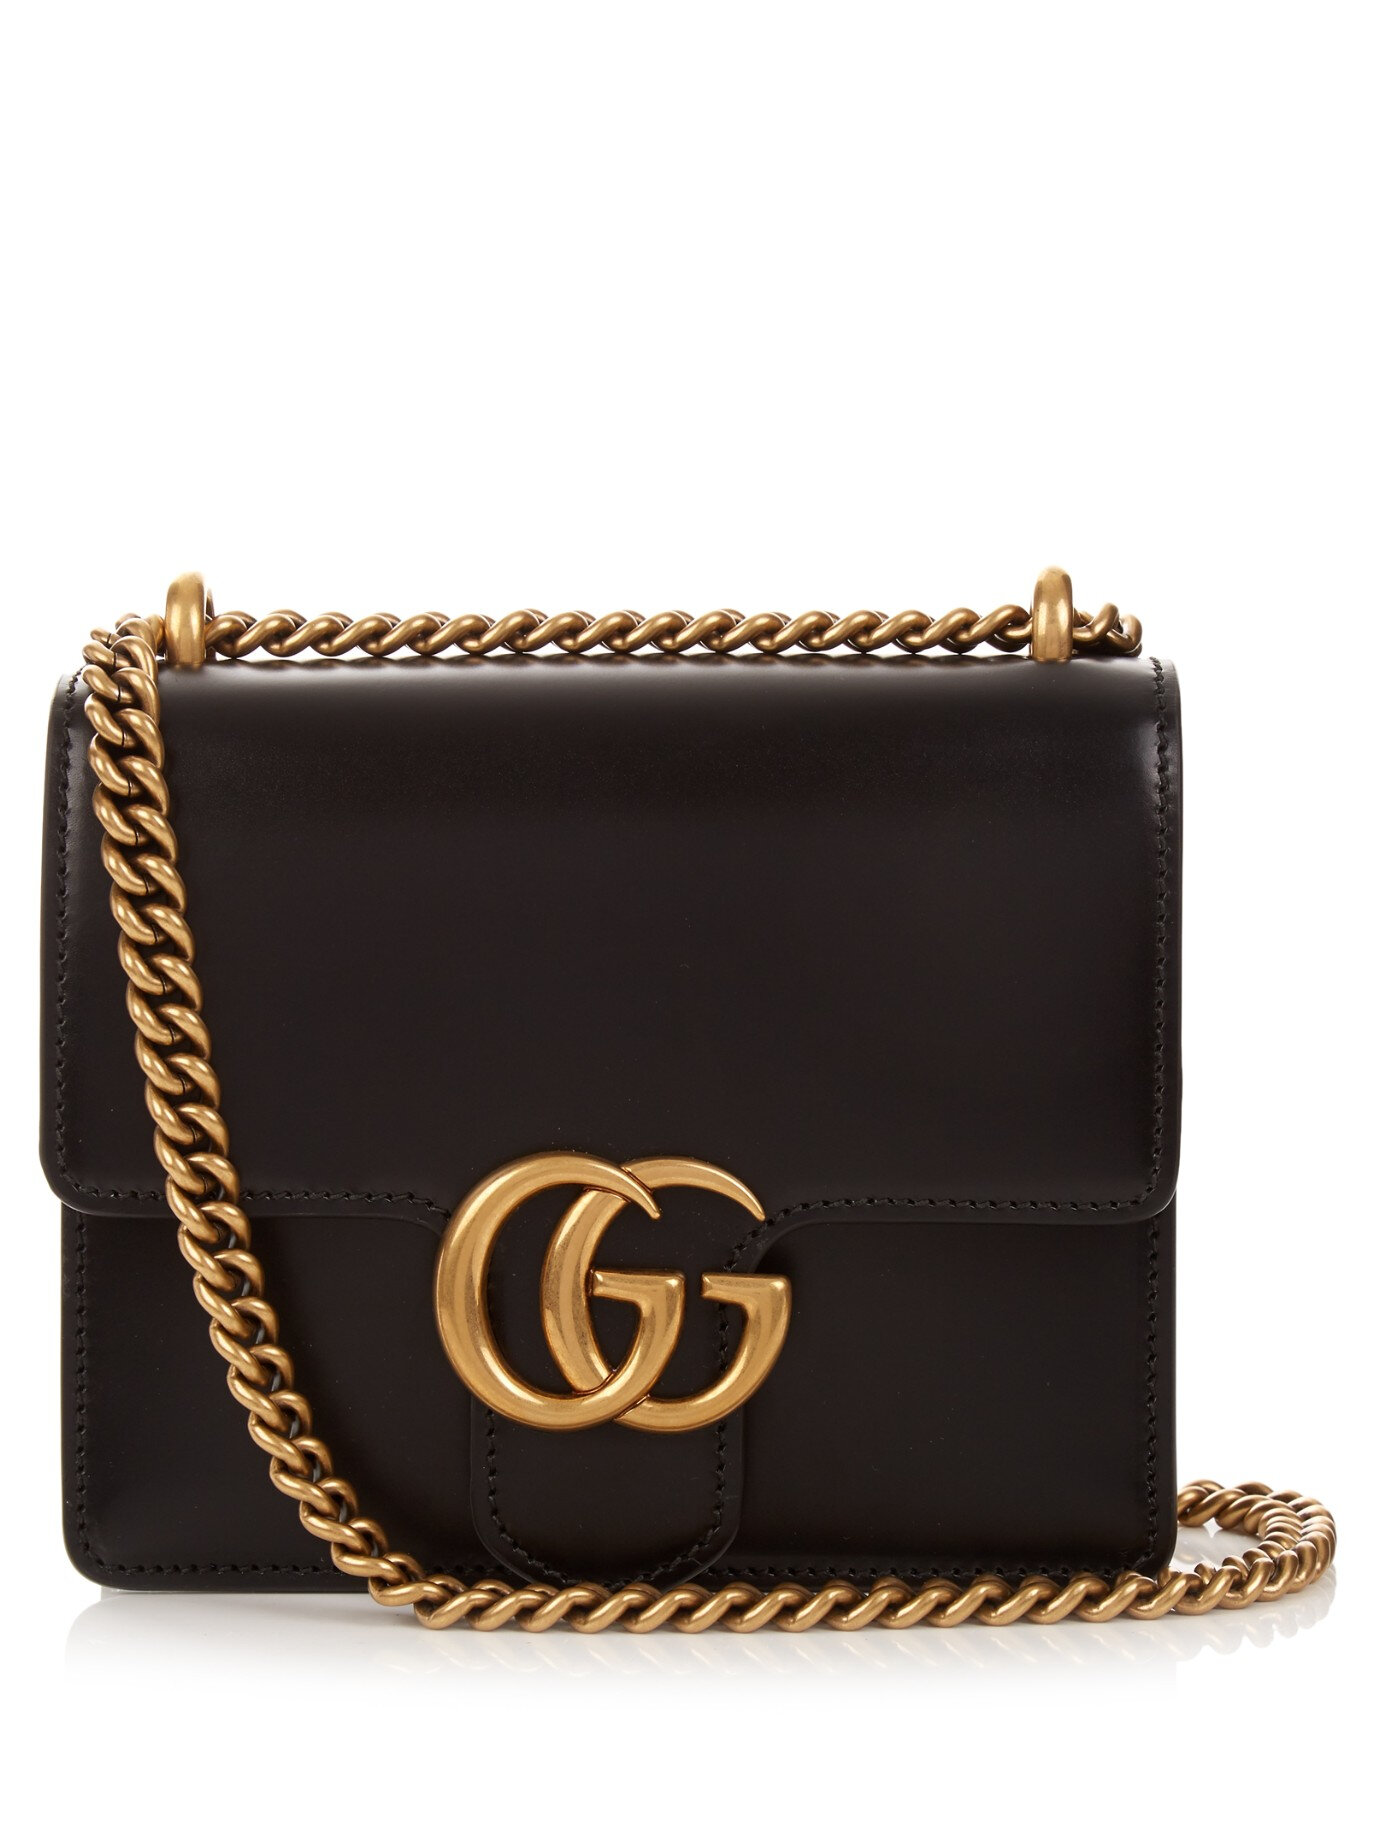 Gucci Marmont Mini Crossbody Bag in Black.jpg